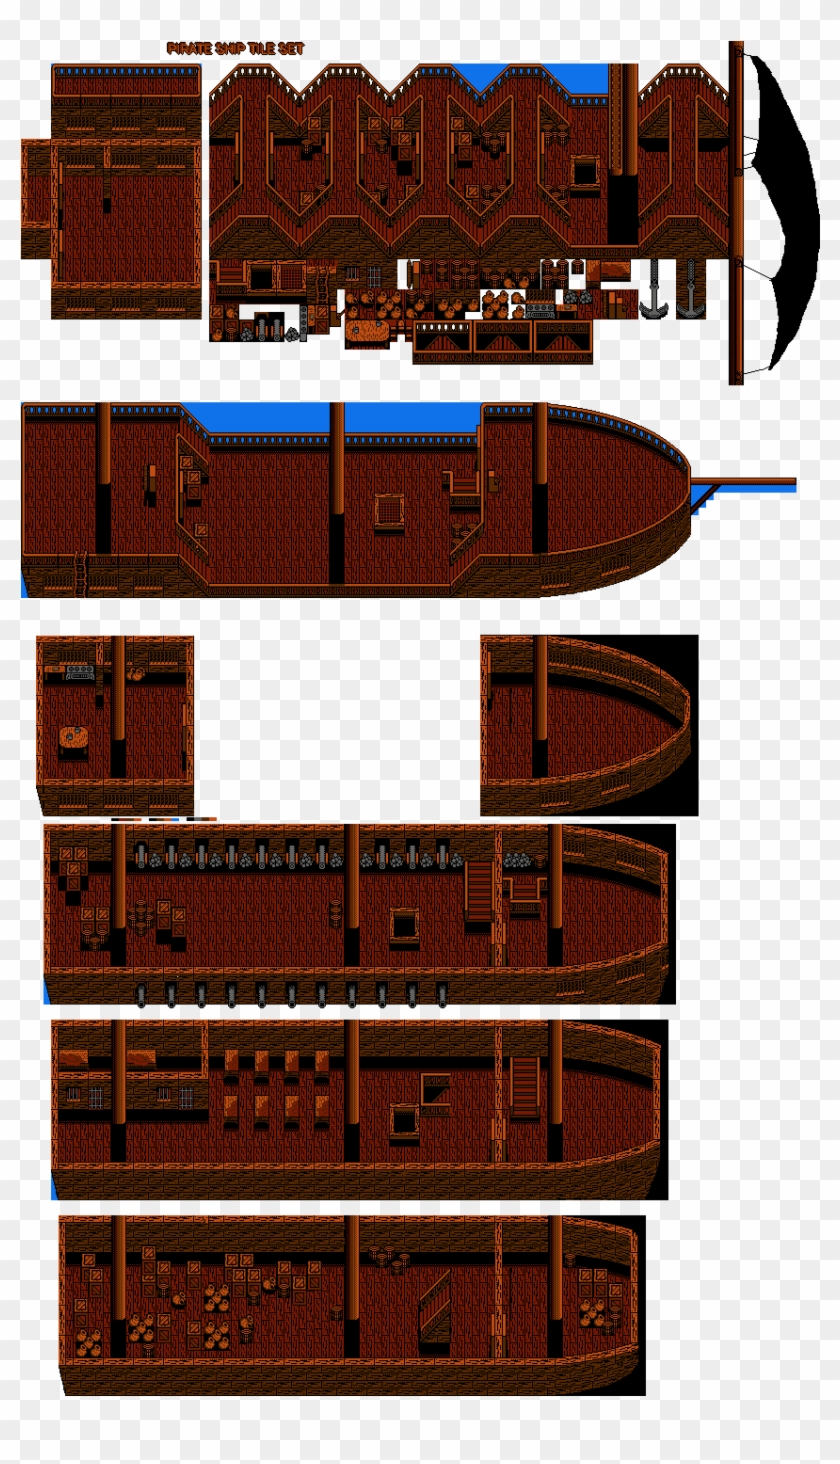 Pirate Ship Tile Set Sheet - Wood Clipart